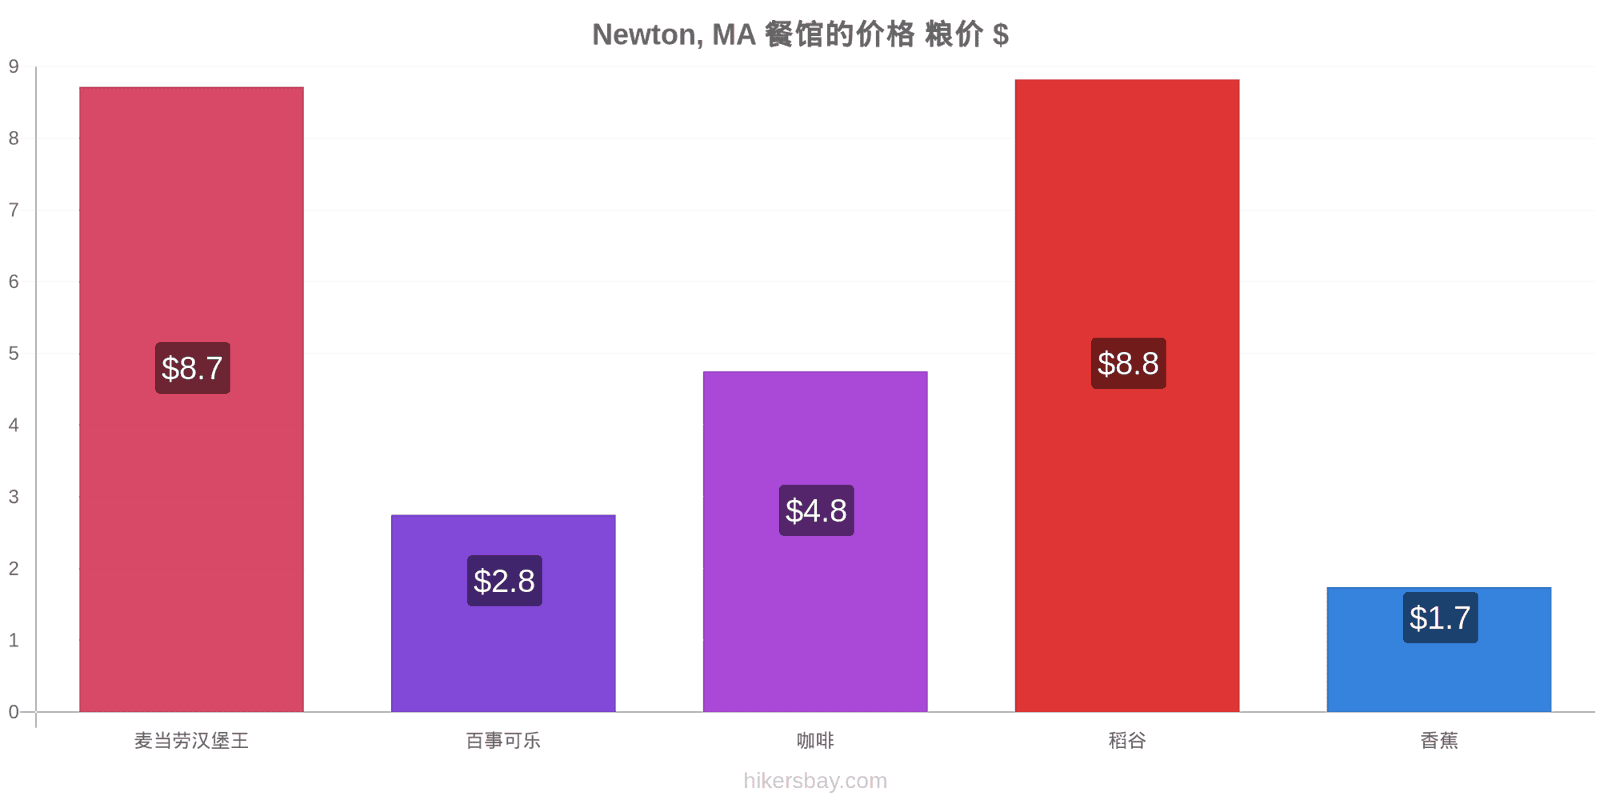 Newton, MA 价格变动 hikersbay.com